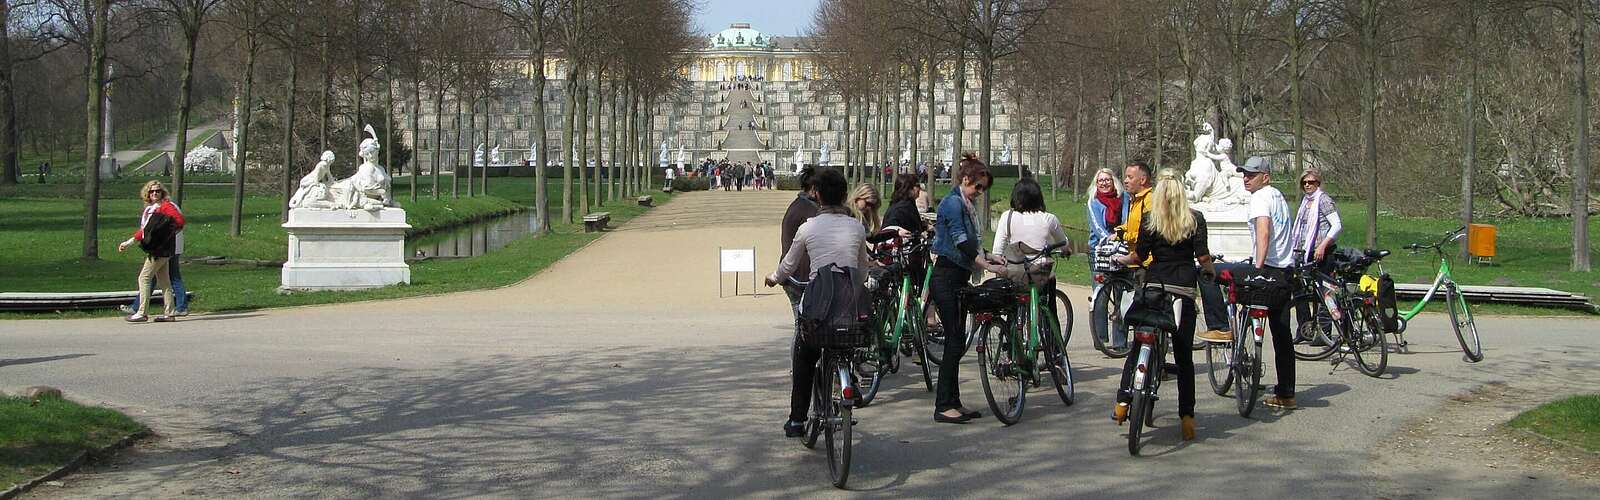 Fahrradfahrer vor dem Schloss Sanssouci,
        
    

        Foto: TMB-Fotoarchiv/Matthias Fricke